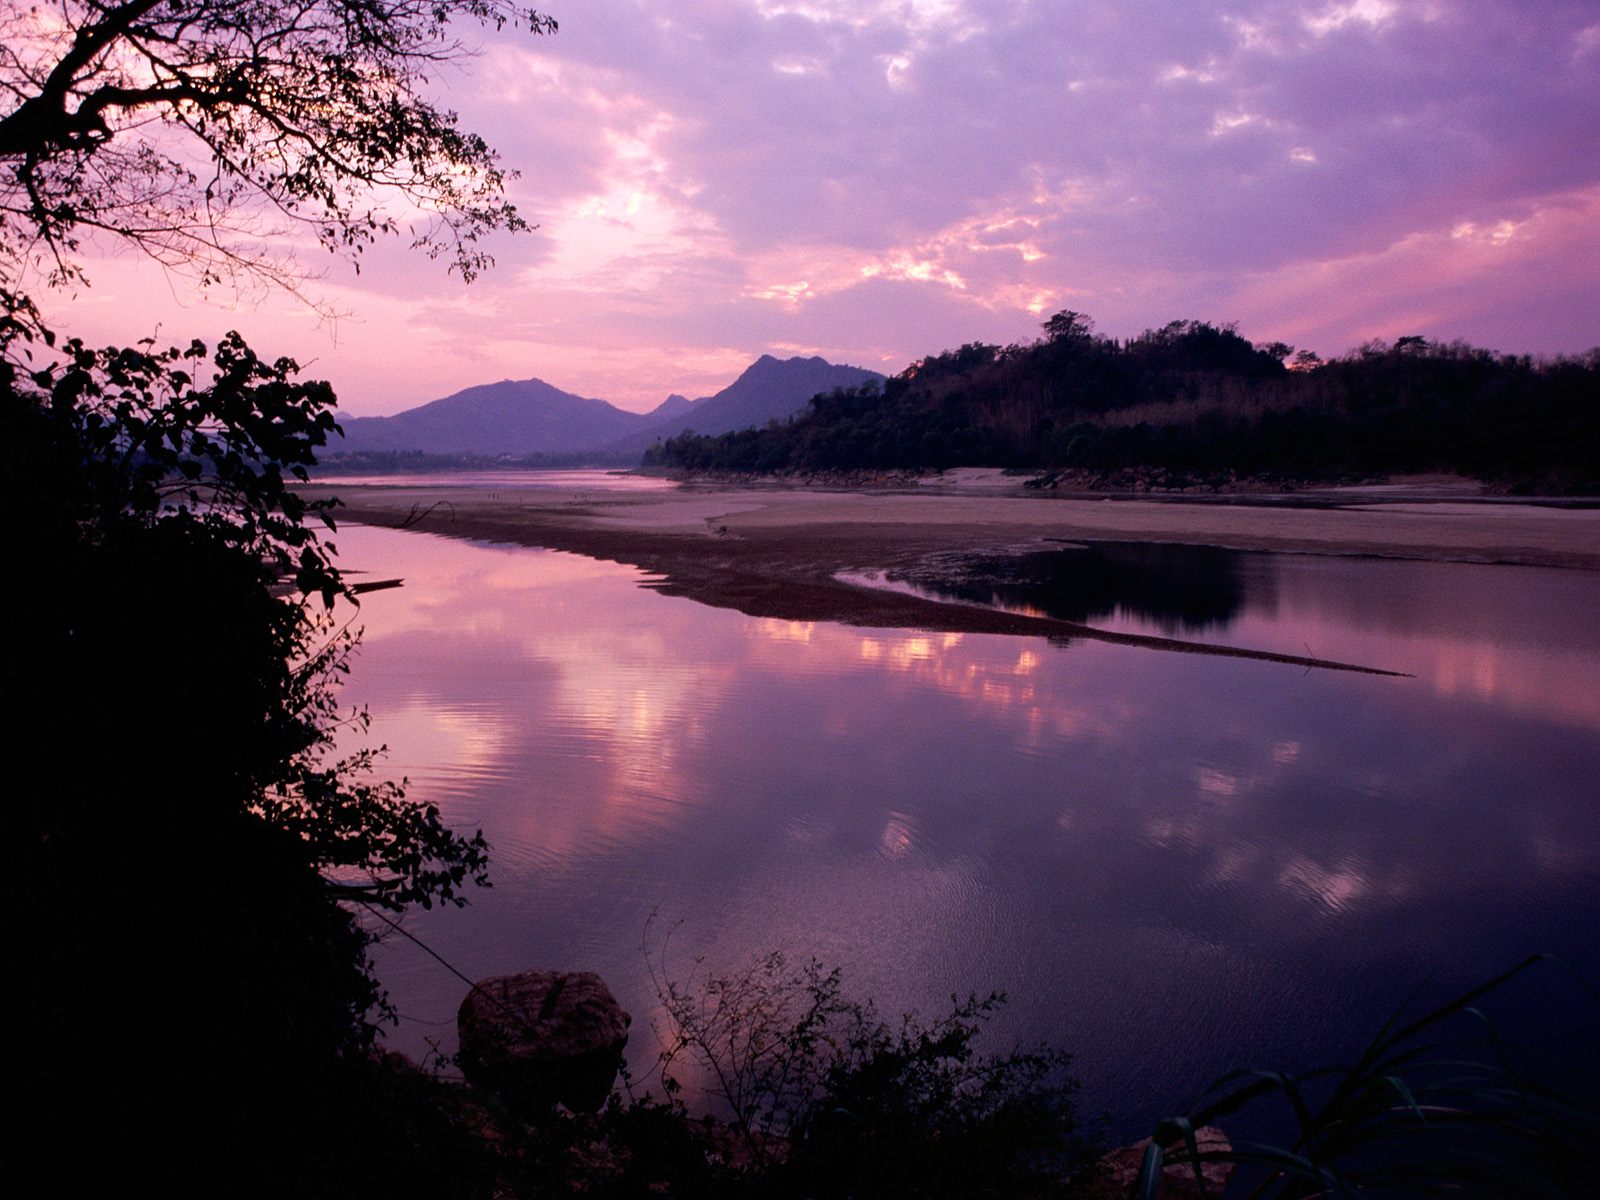 http://1.bp.blogspot.com/_ioD6UOQqcyA/Sw73HvEaMaI/AAAAAAAABc4/wVj6O44-tC8/s1600/Khan+River,+Luang+Prabang,+Laos.jpg